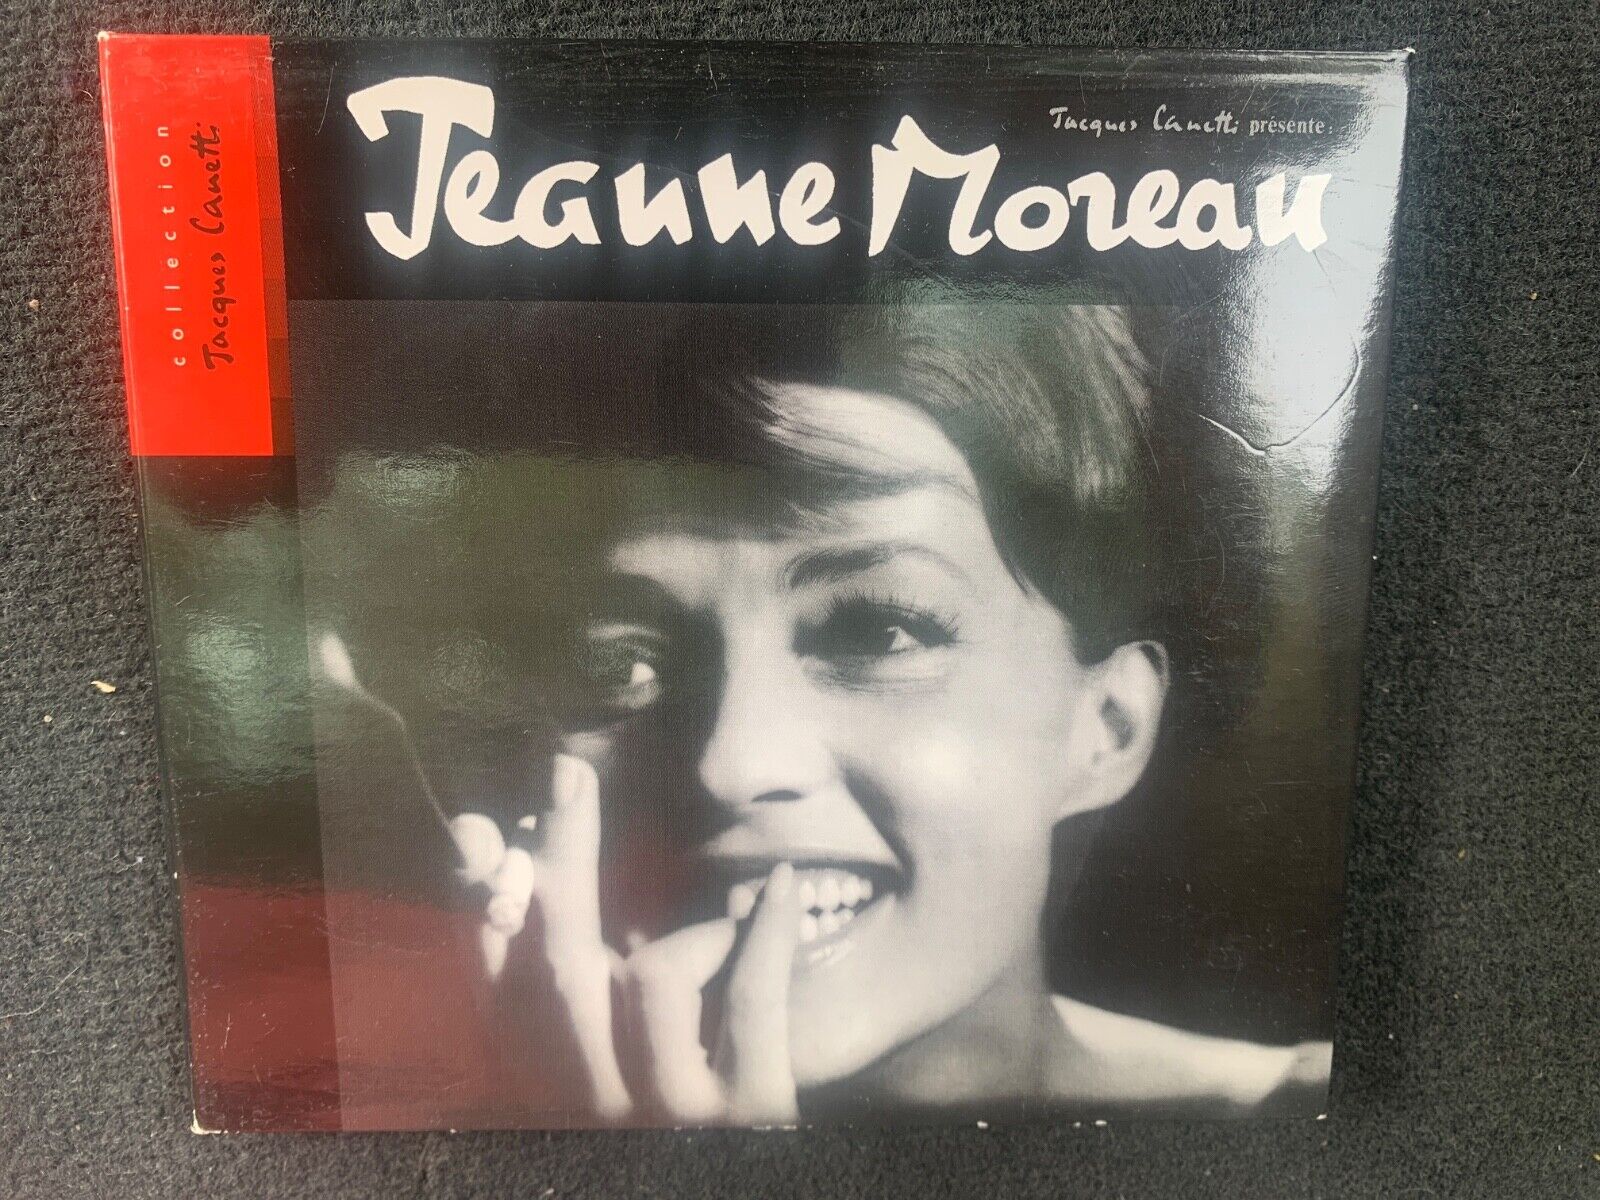 Le Meilleur De Jeanne Moreau French Actress Volume 1 Used Music CD 1963 2006-VG